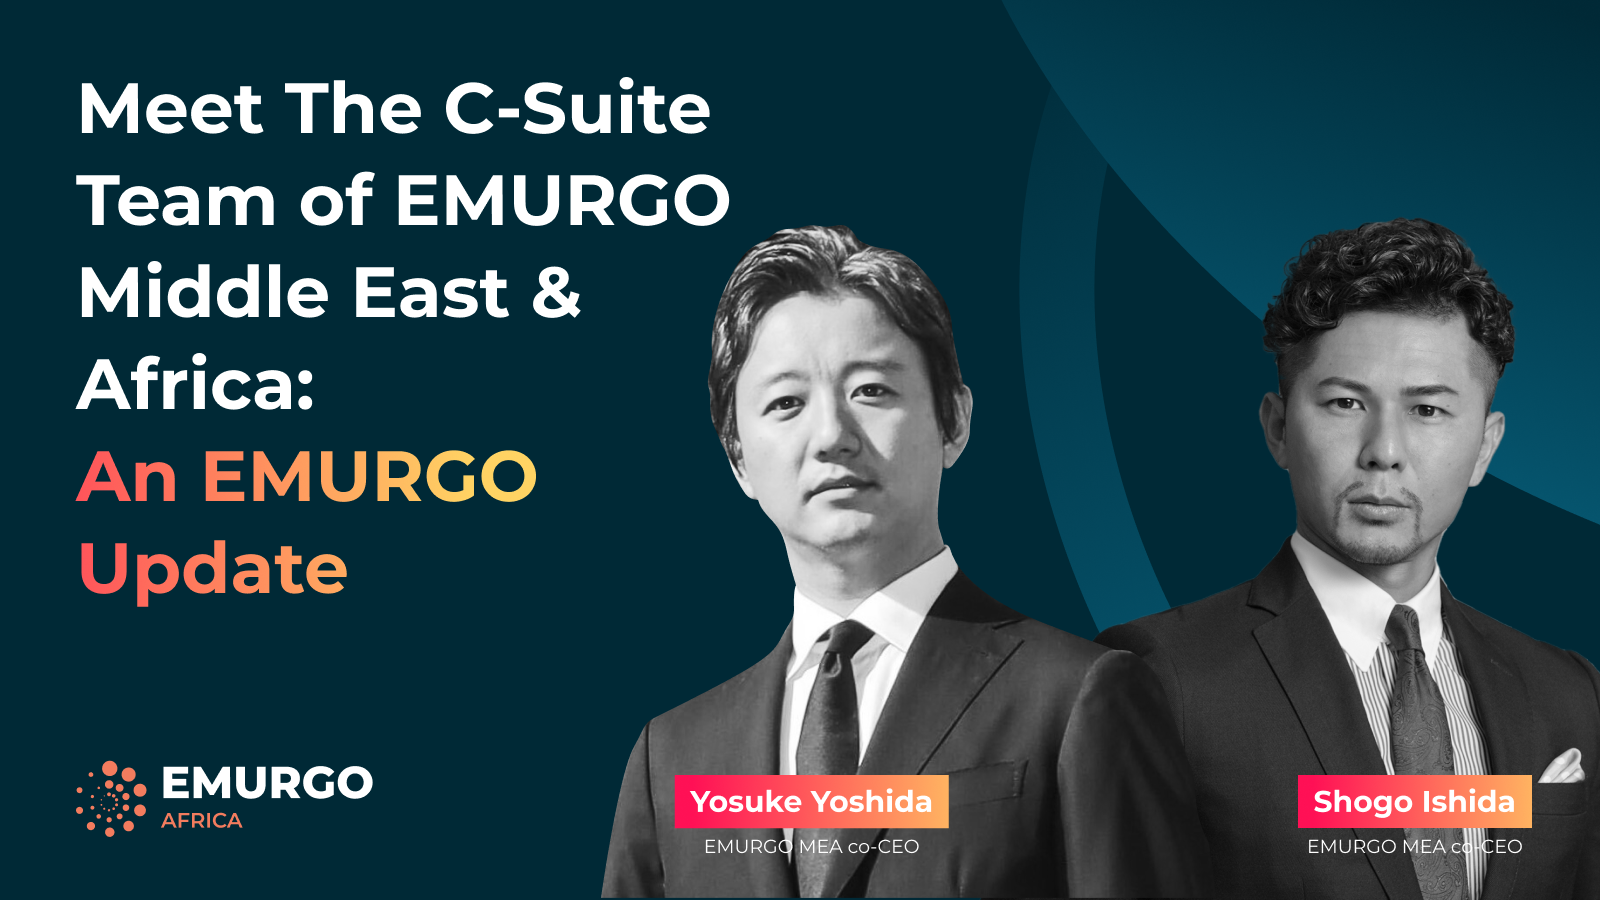 Meet the C-Suite Team of EMURGO Middle East & Africa: An EMURGO Update